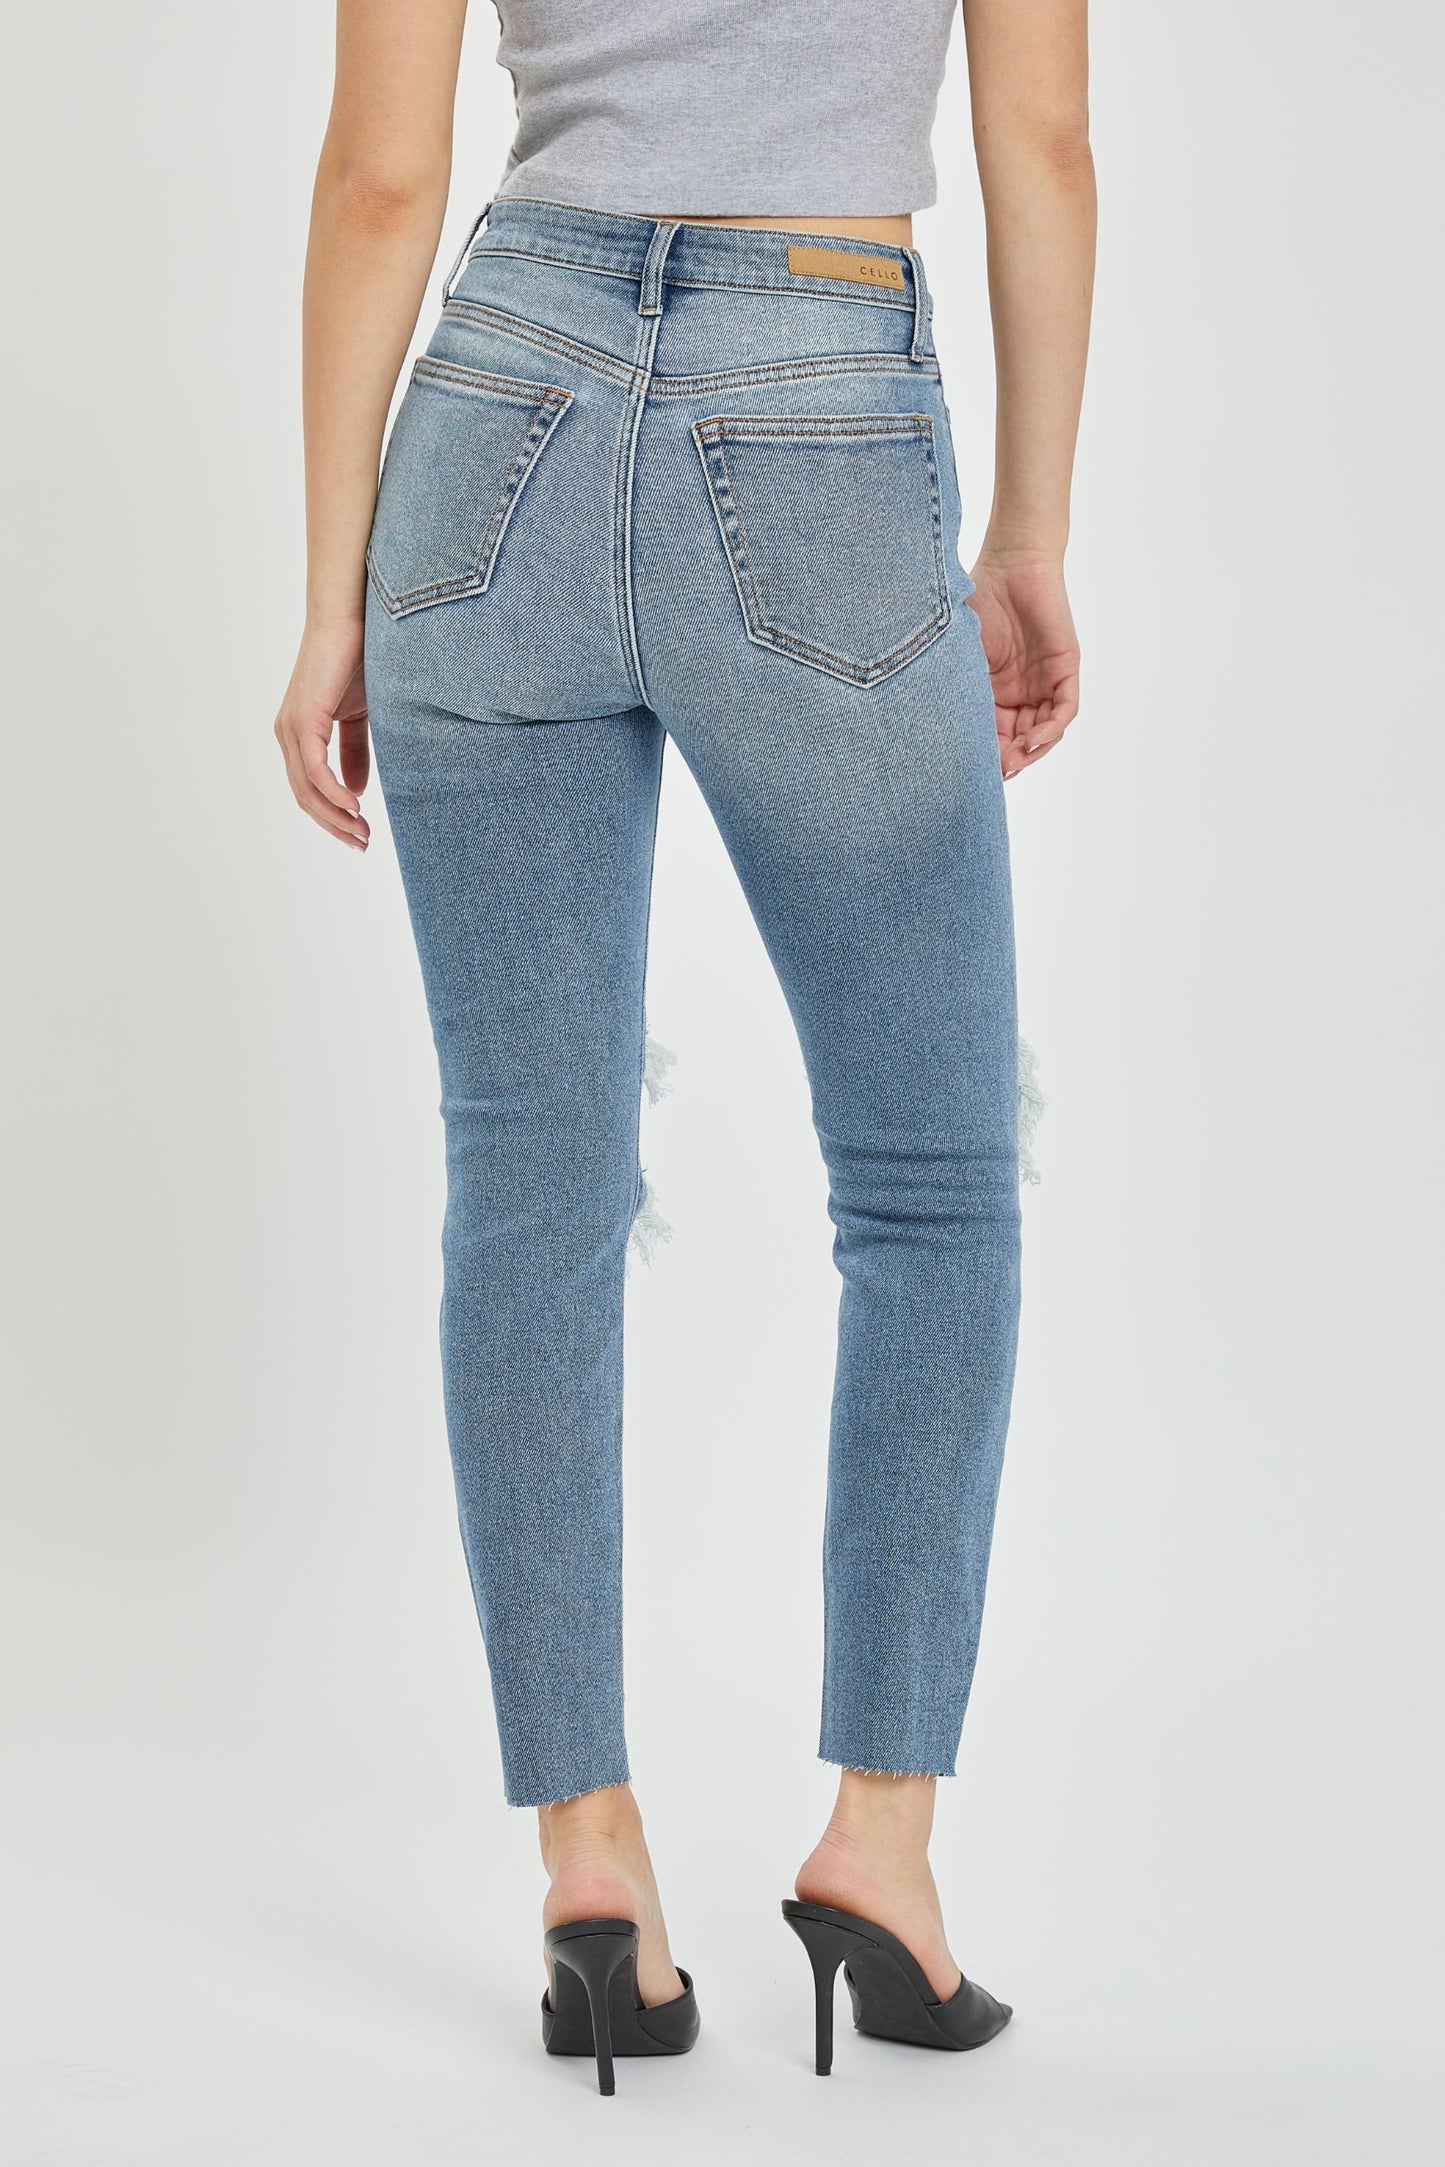 Keyla Jeans